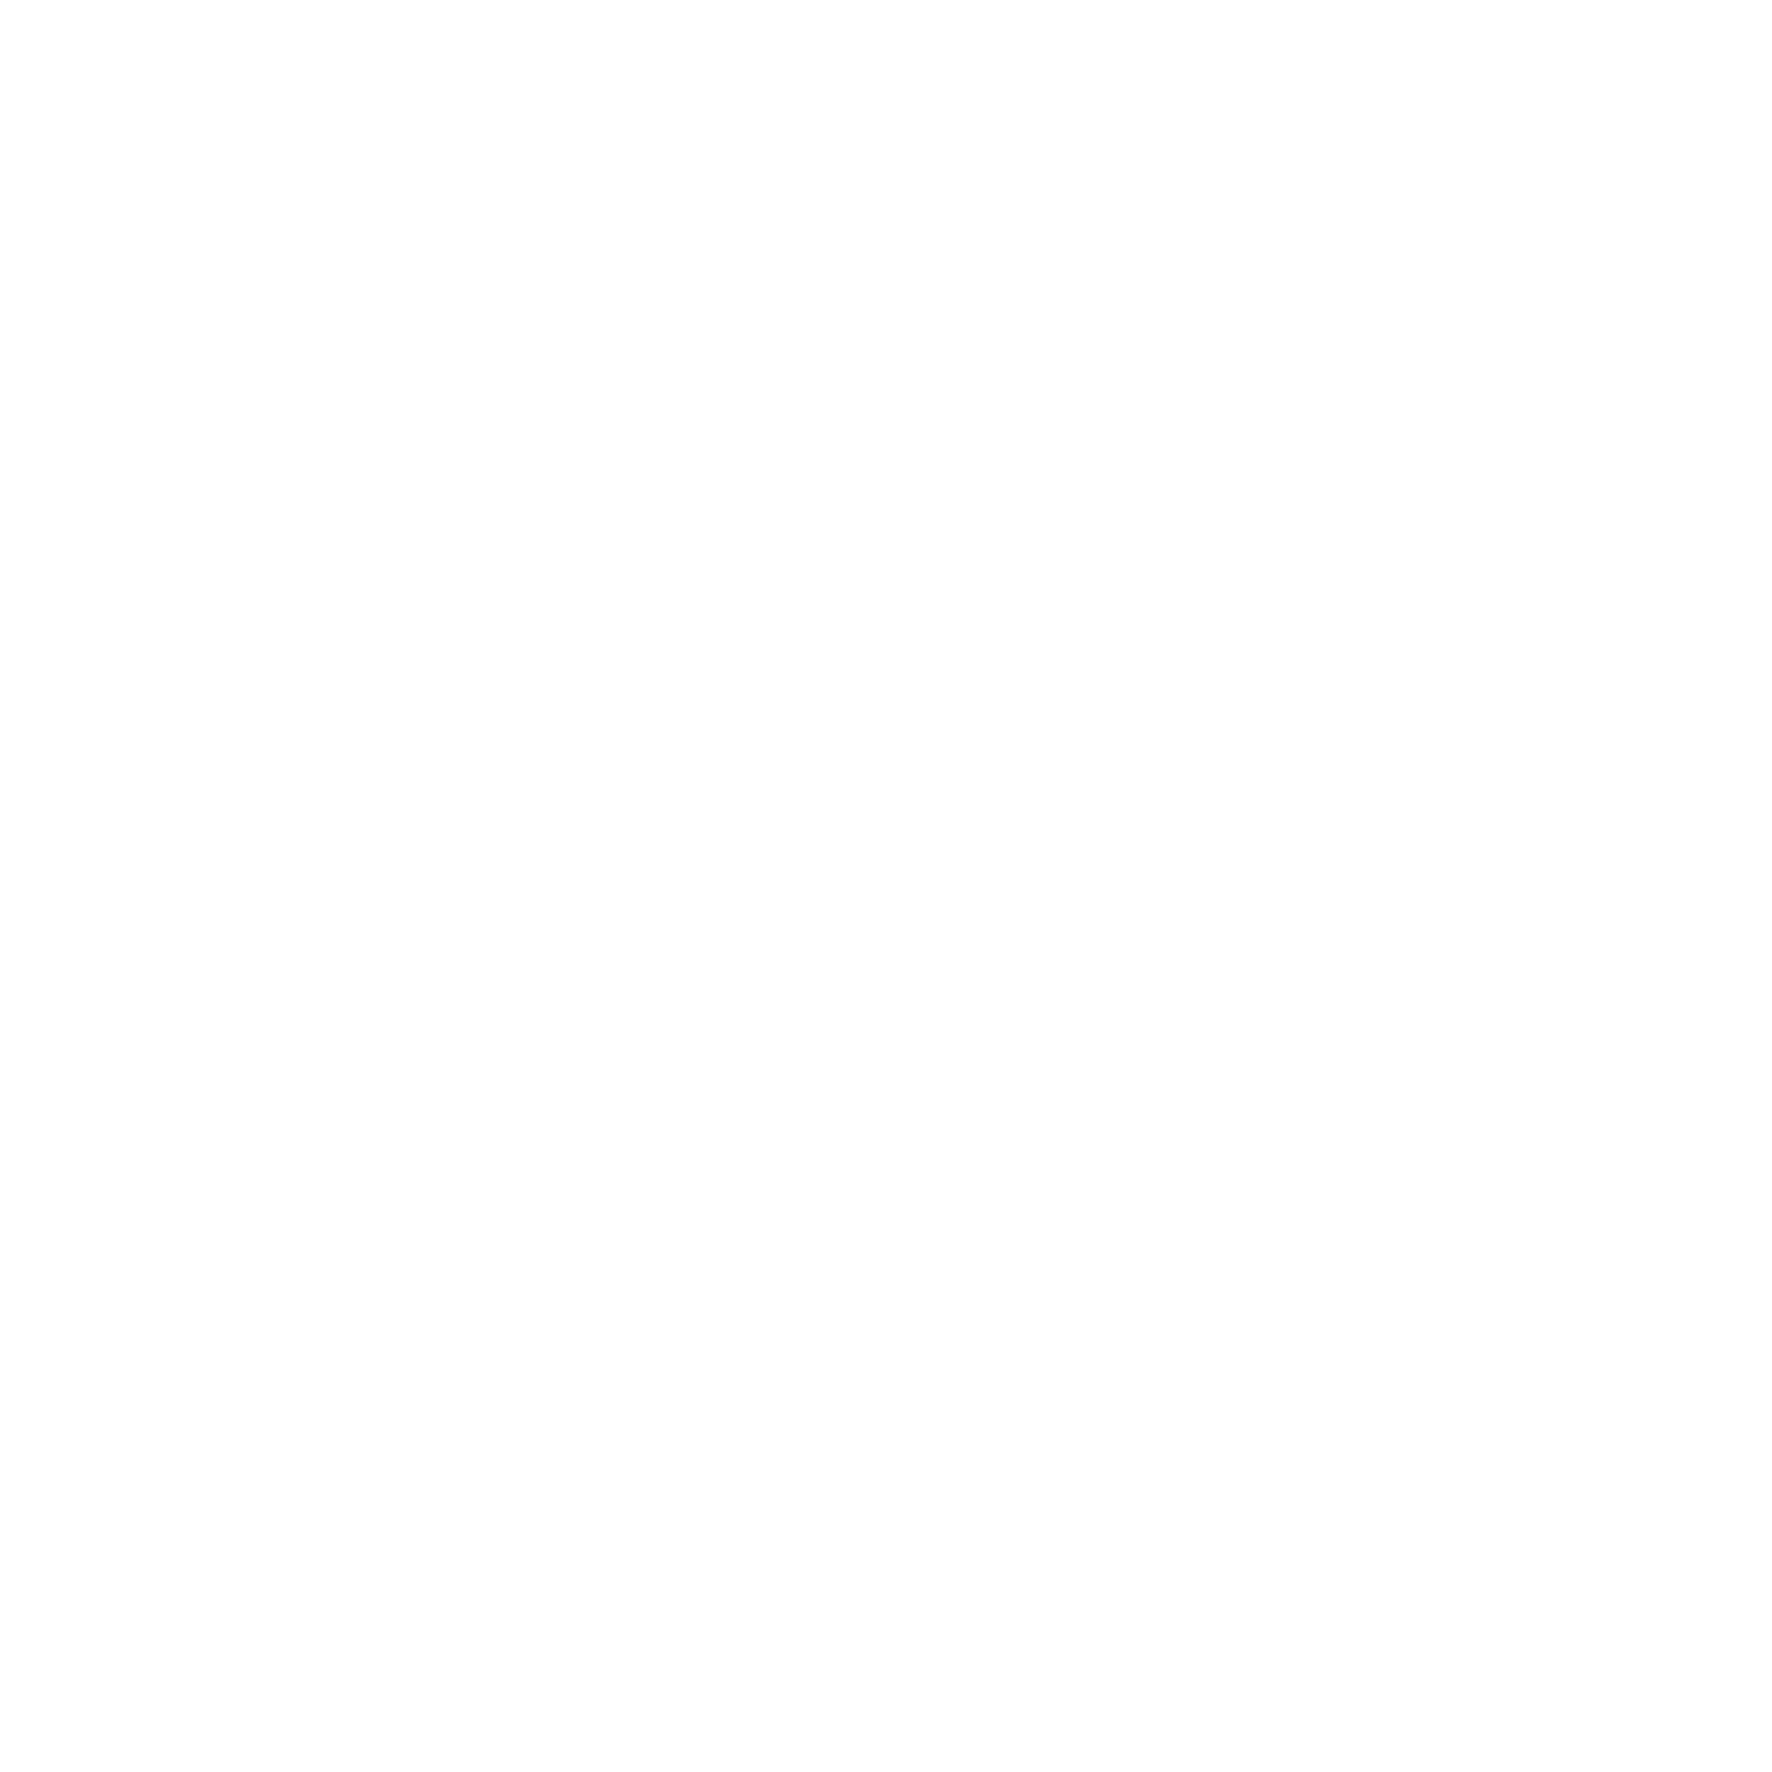 Rip Curl Logo & Transparent Rip Curl.PNG Logo Images